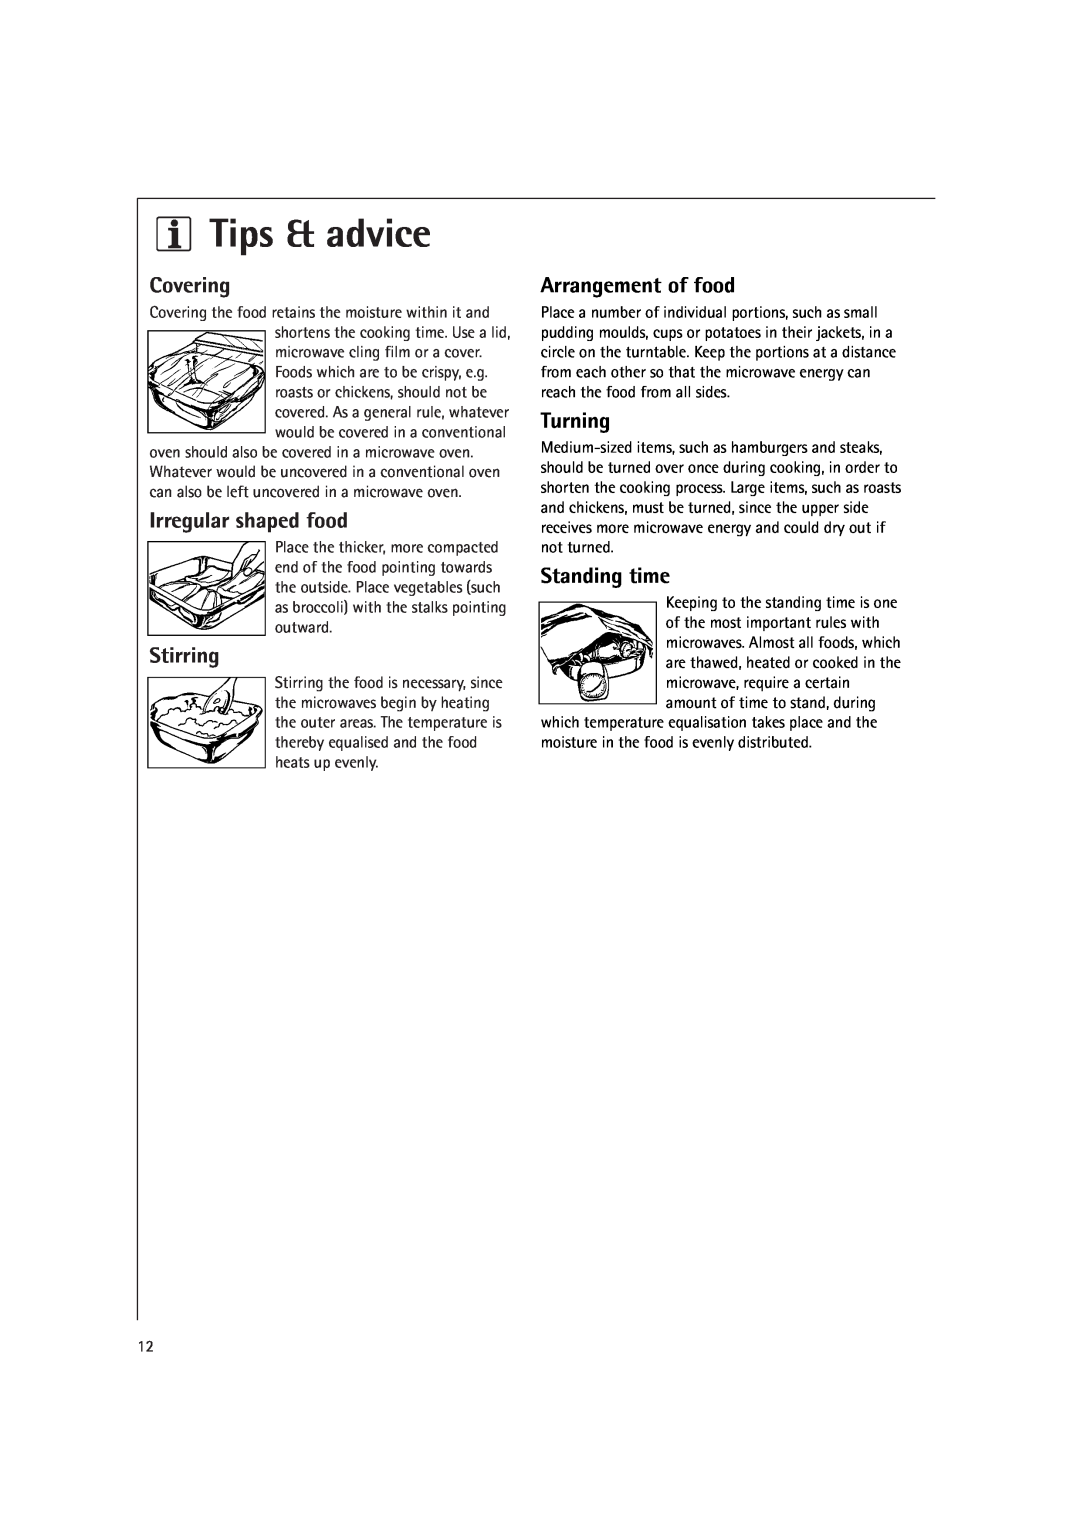 AEG MCD2661E Tips & advice, Covering, Irregular shaped food, Stirring, Arrangement of food, Turning, Standing time 